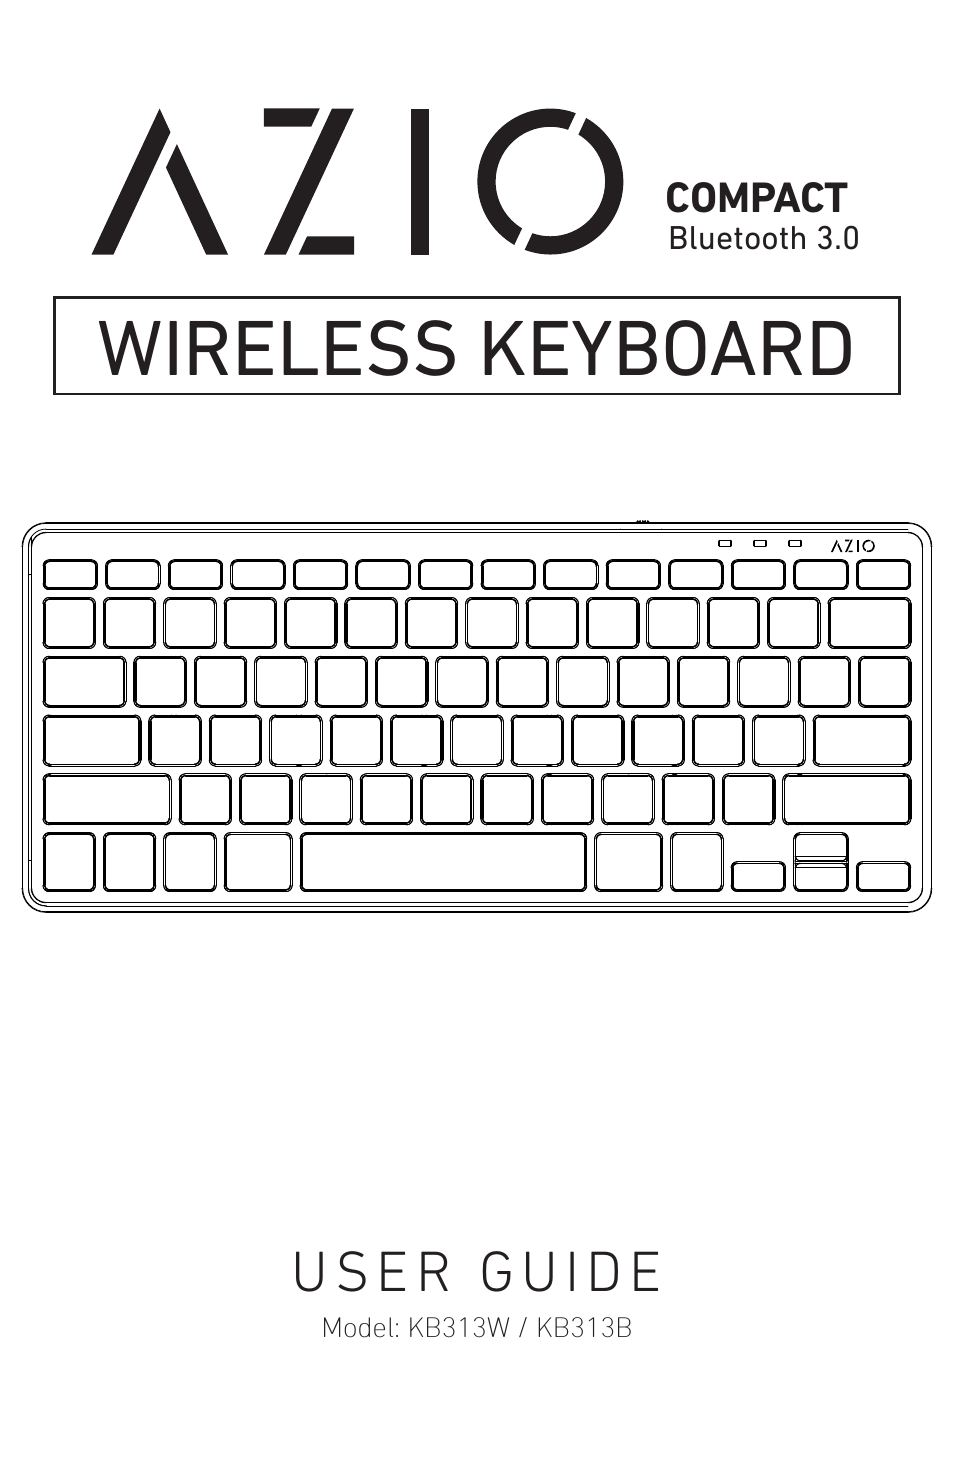 Compact Bluetooth Keyboard (KB313W)